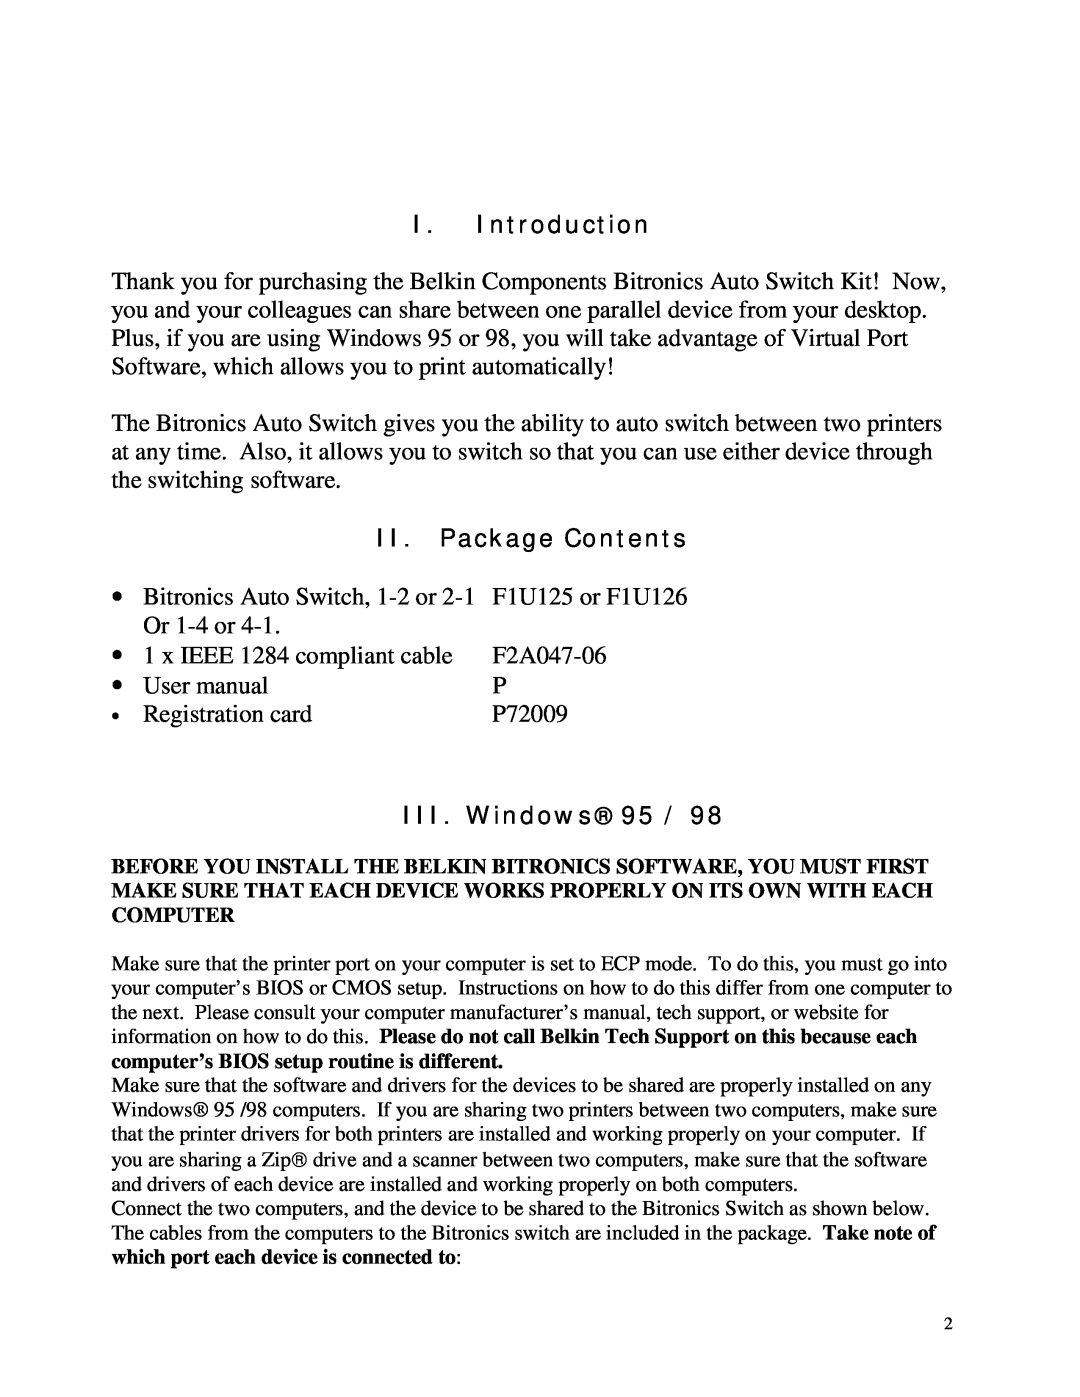 Belkin WINDOWS NT/2k/XP manual I. Introduction, II. Package Contents, III. Windows 95 